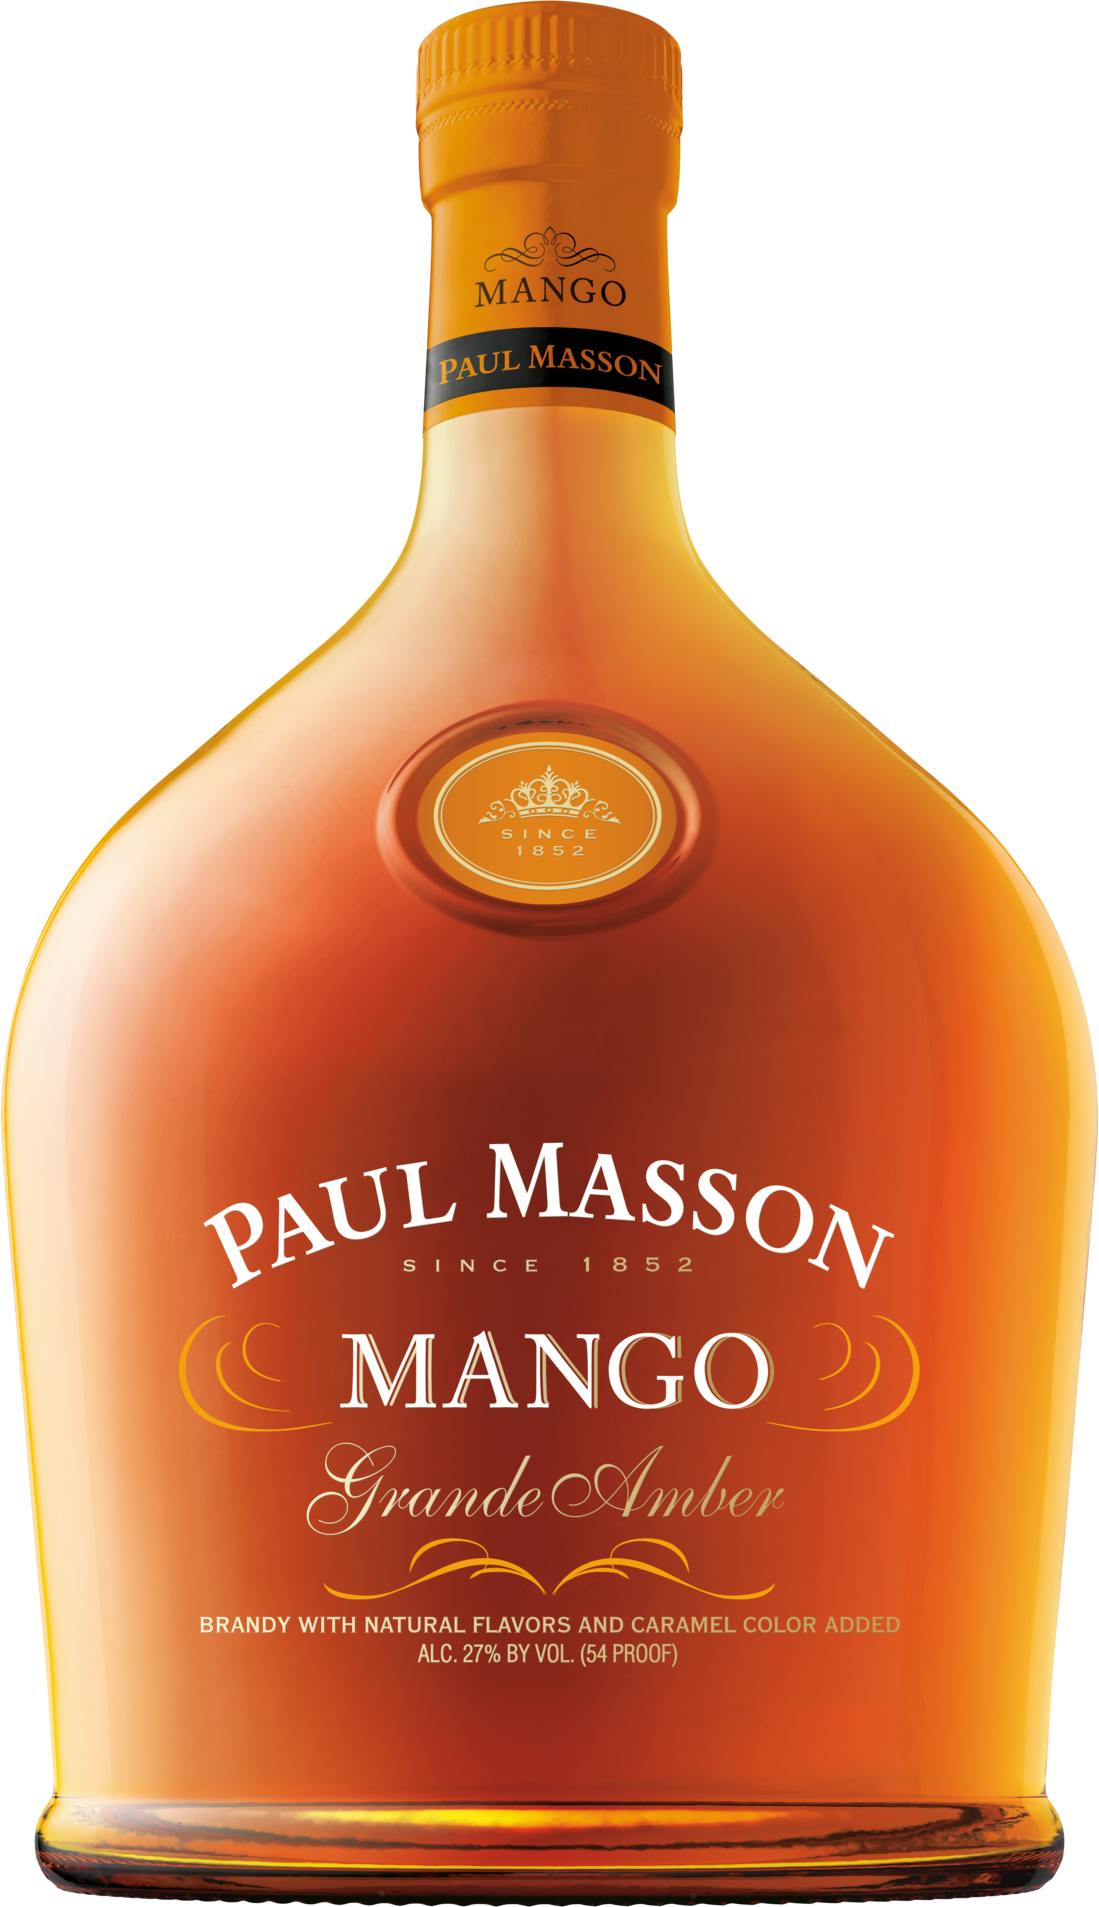 Paul Masson Grande Amber Mango Brandy 750ml